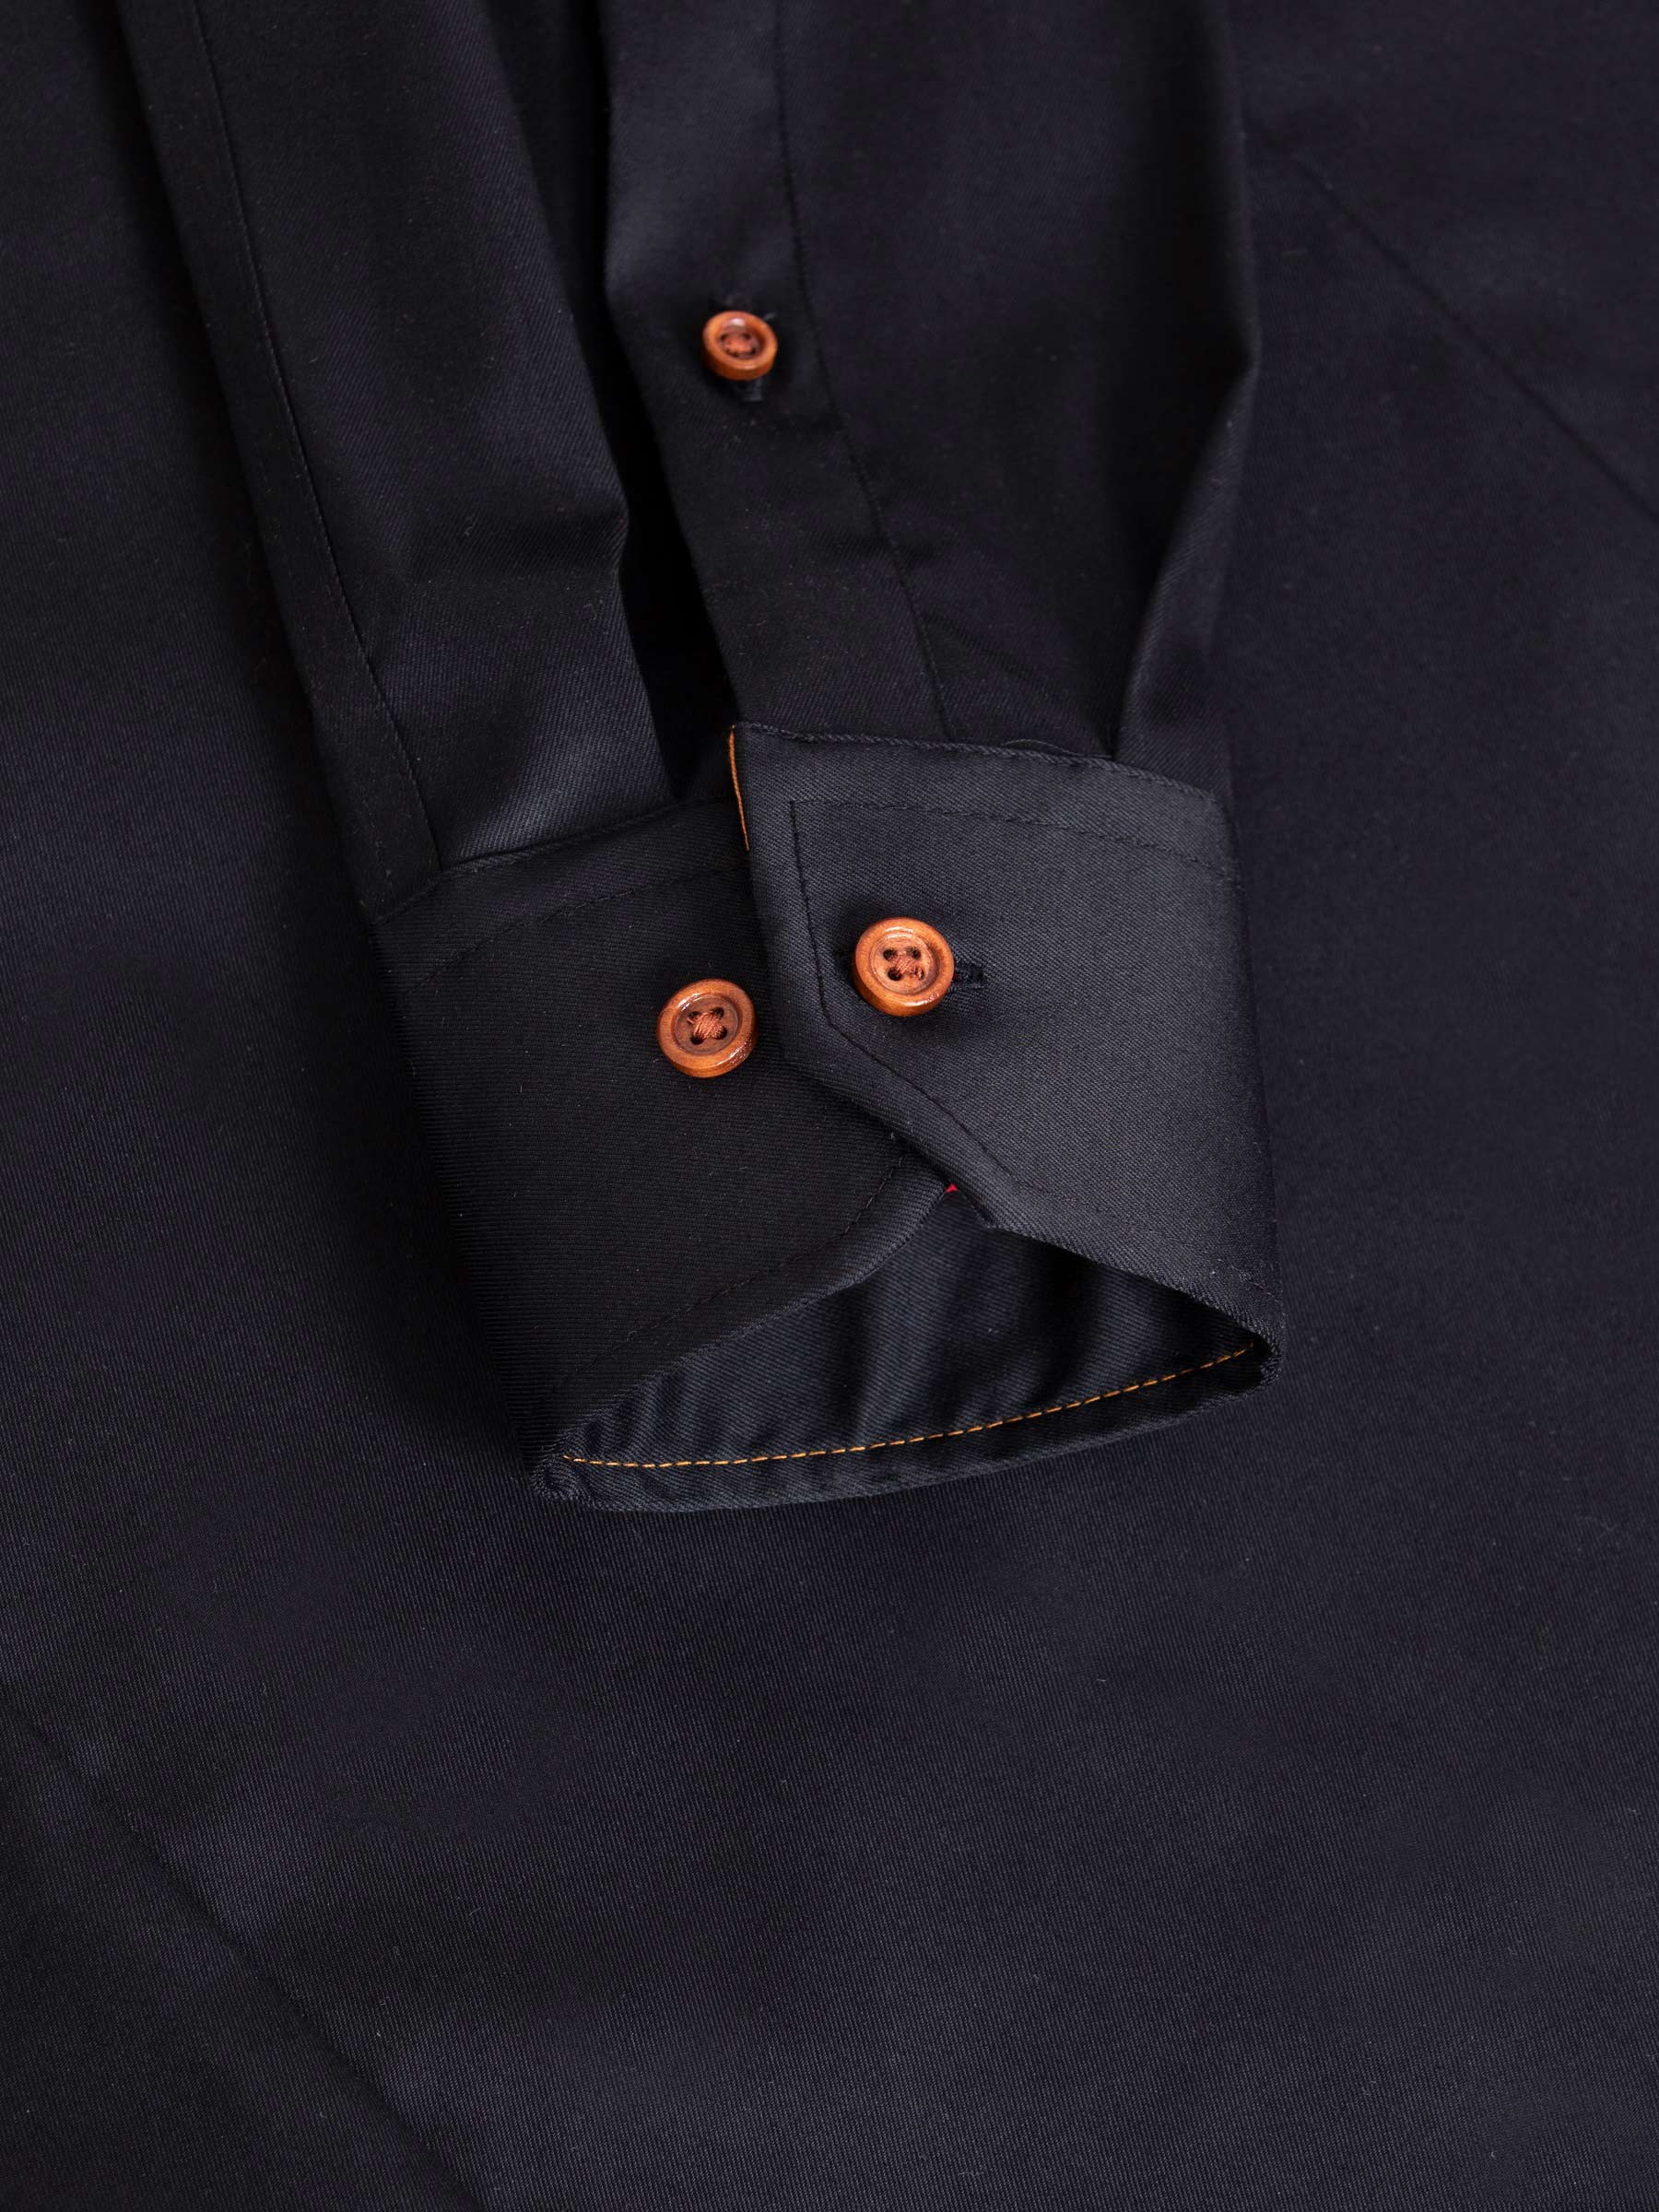  Romney Solid Black Long Sleeve Shirt